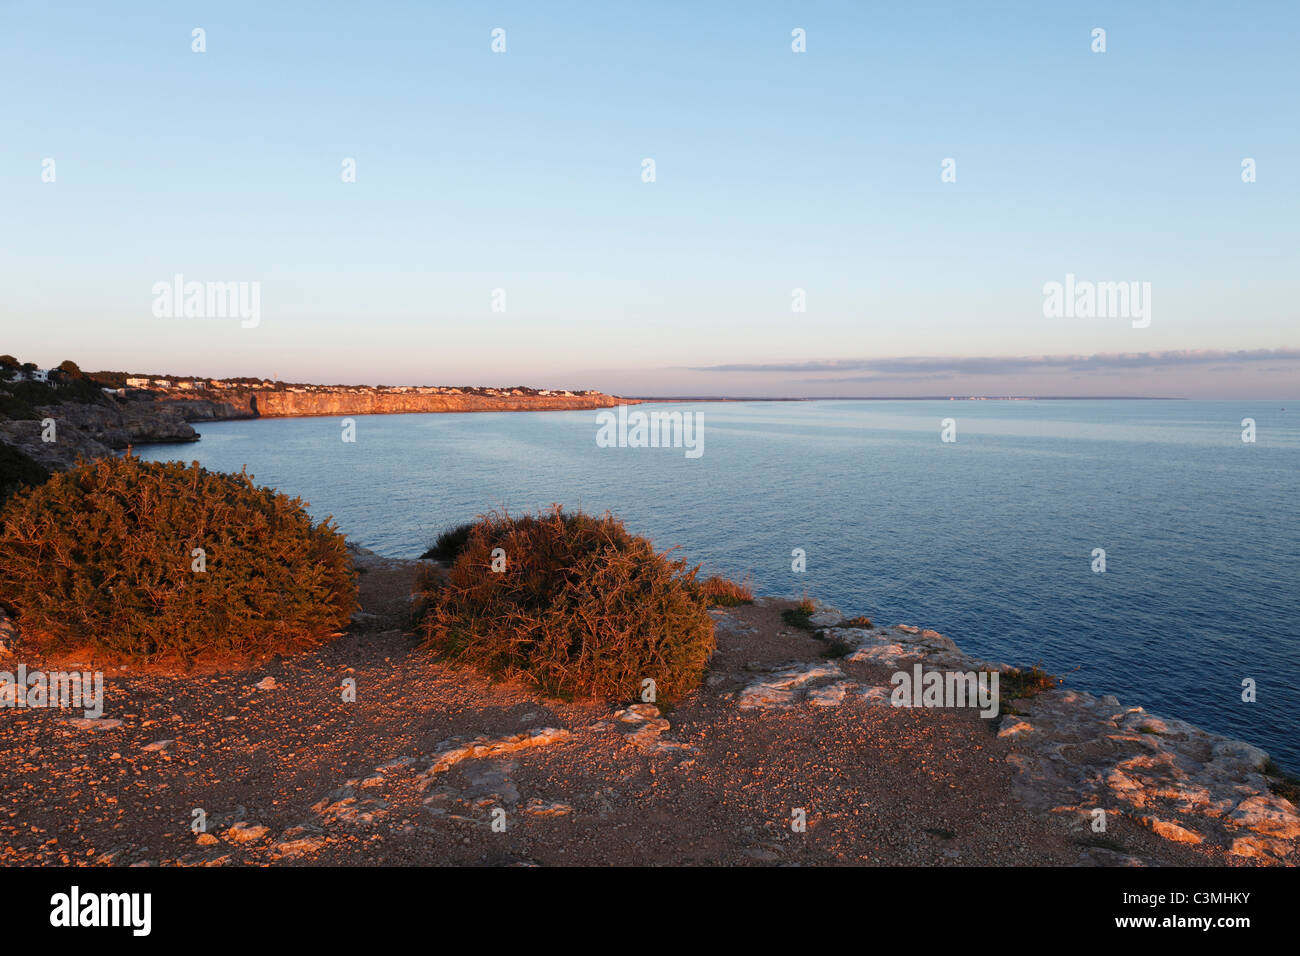 Spain, Balearic Islands, Majorca, View of cala pi at dusk Stock Photo